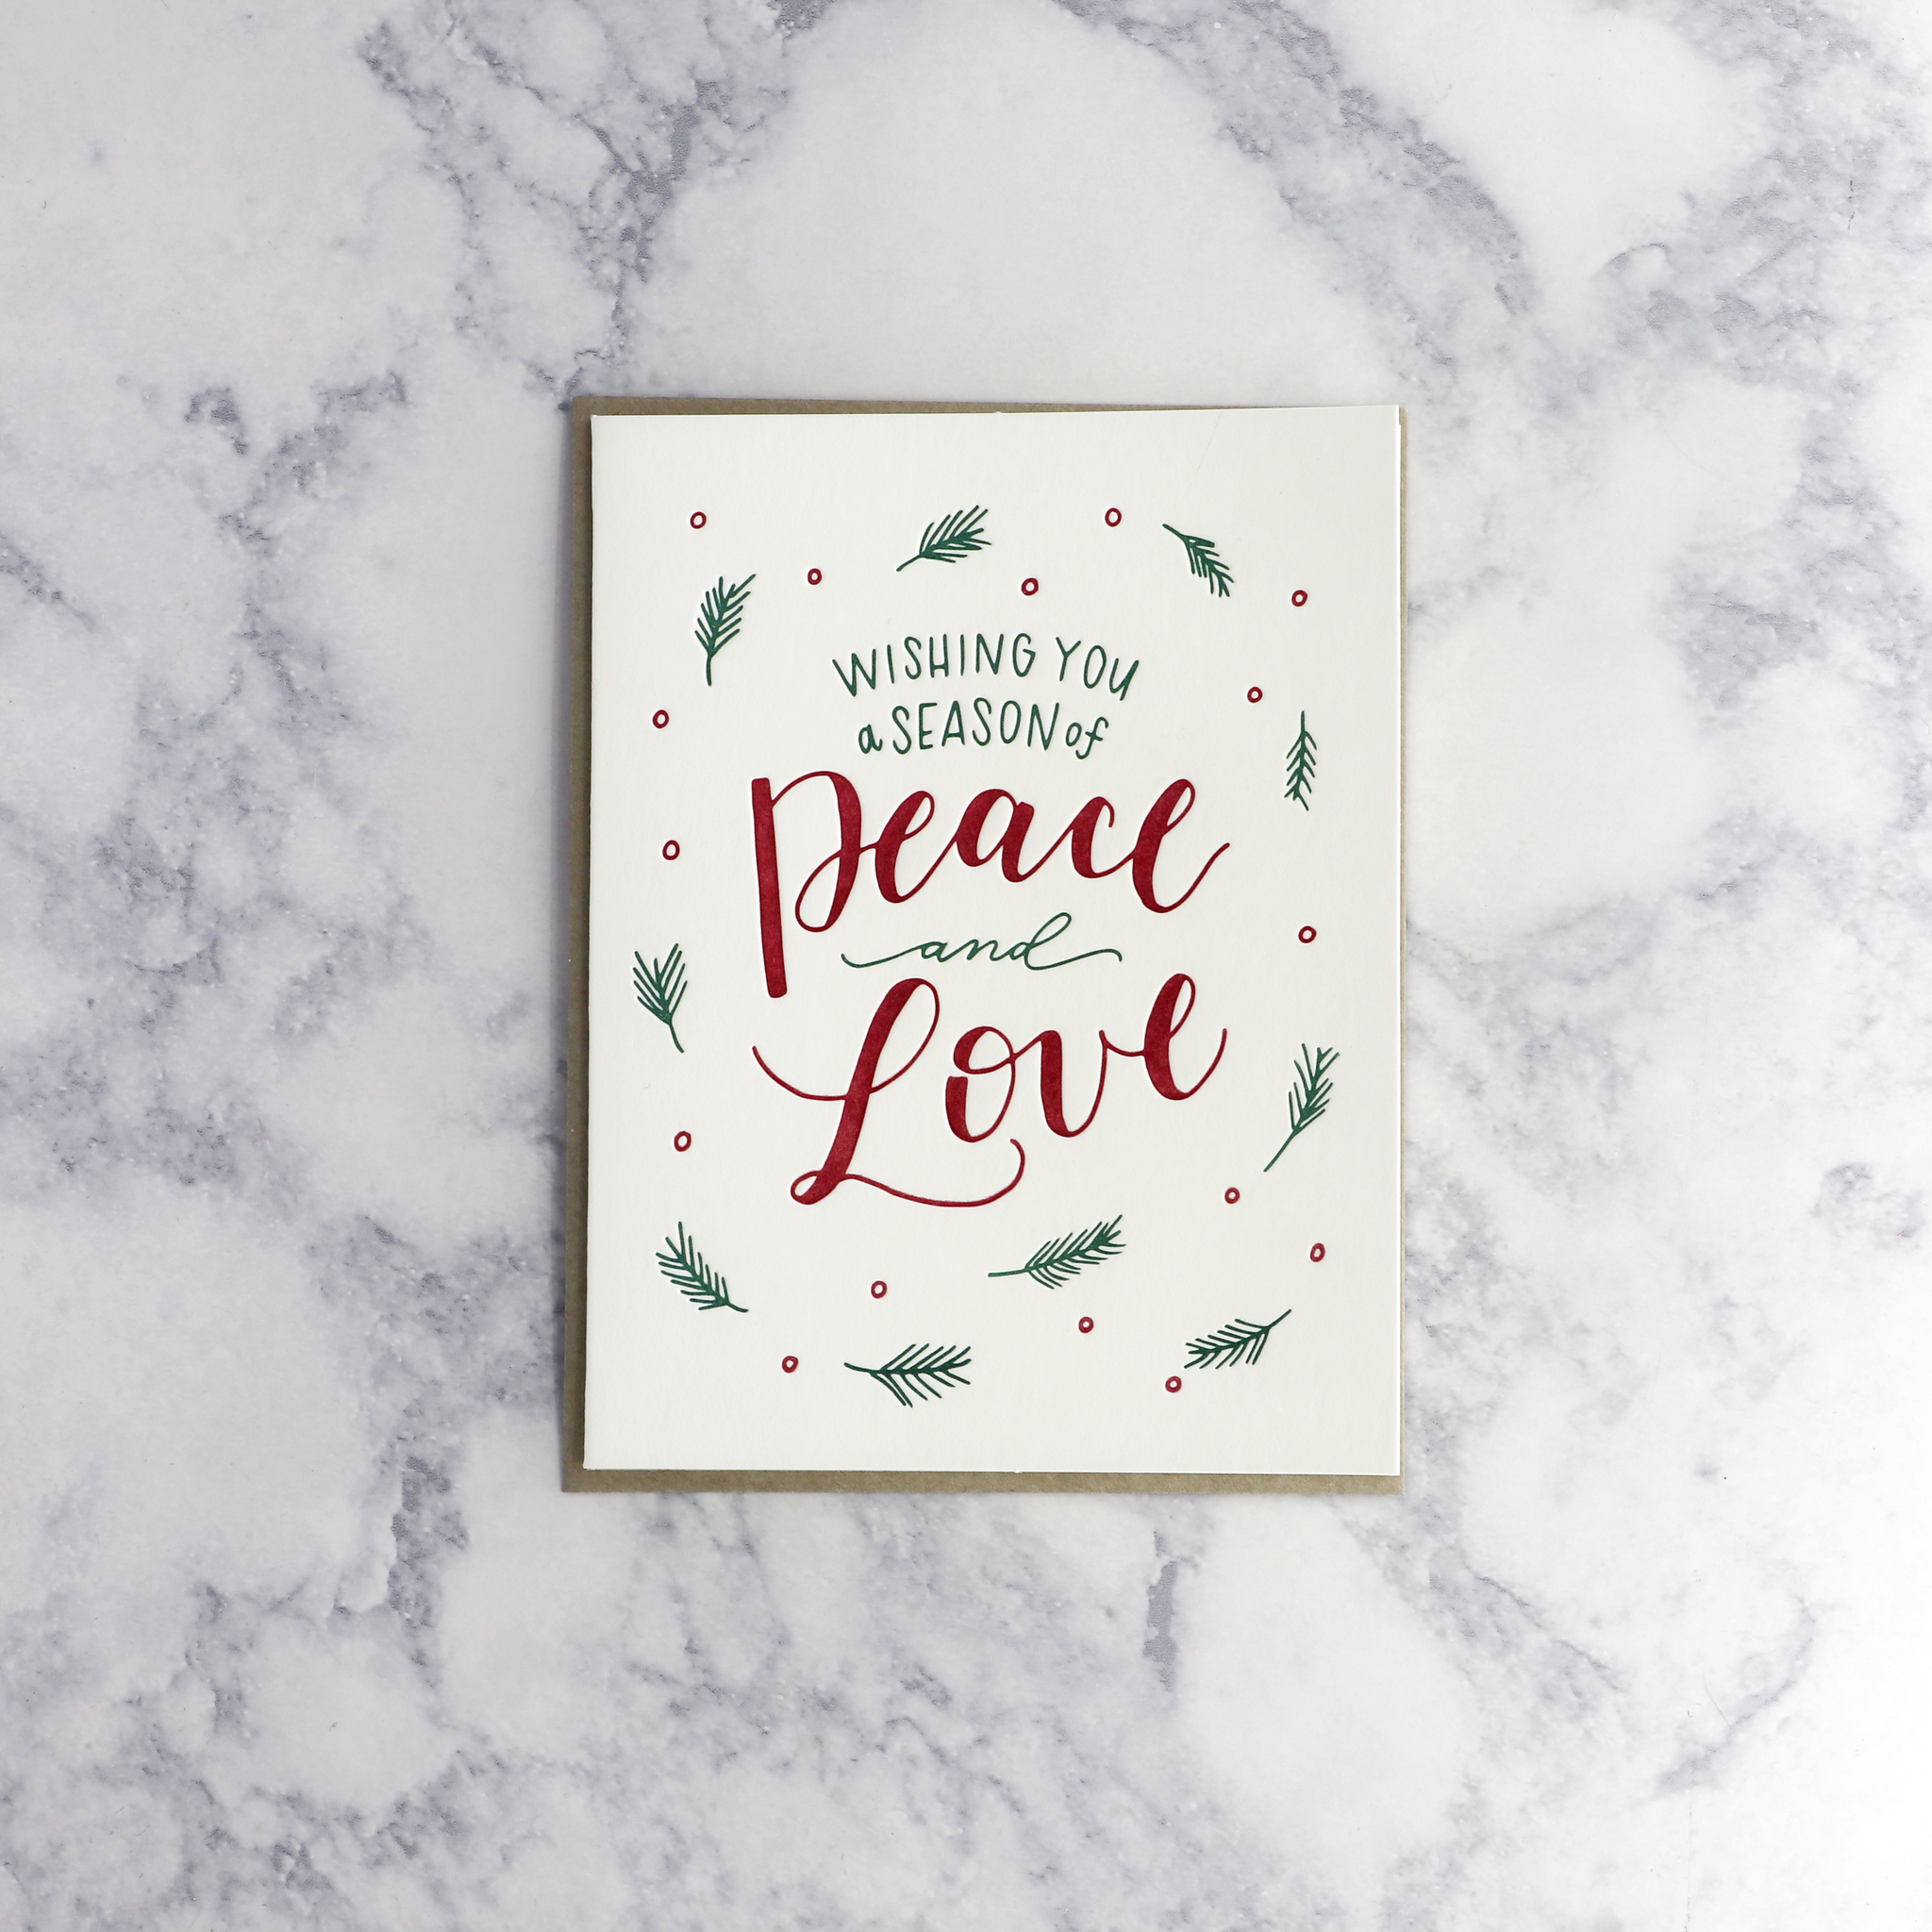 Letterpress "Season of Peace & Love" Holiday Card